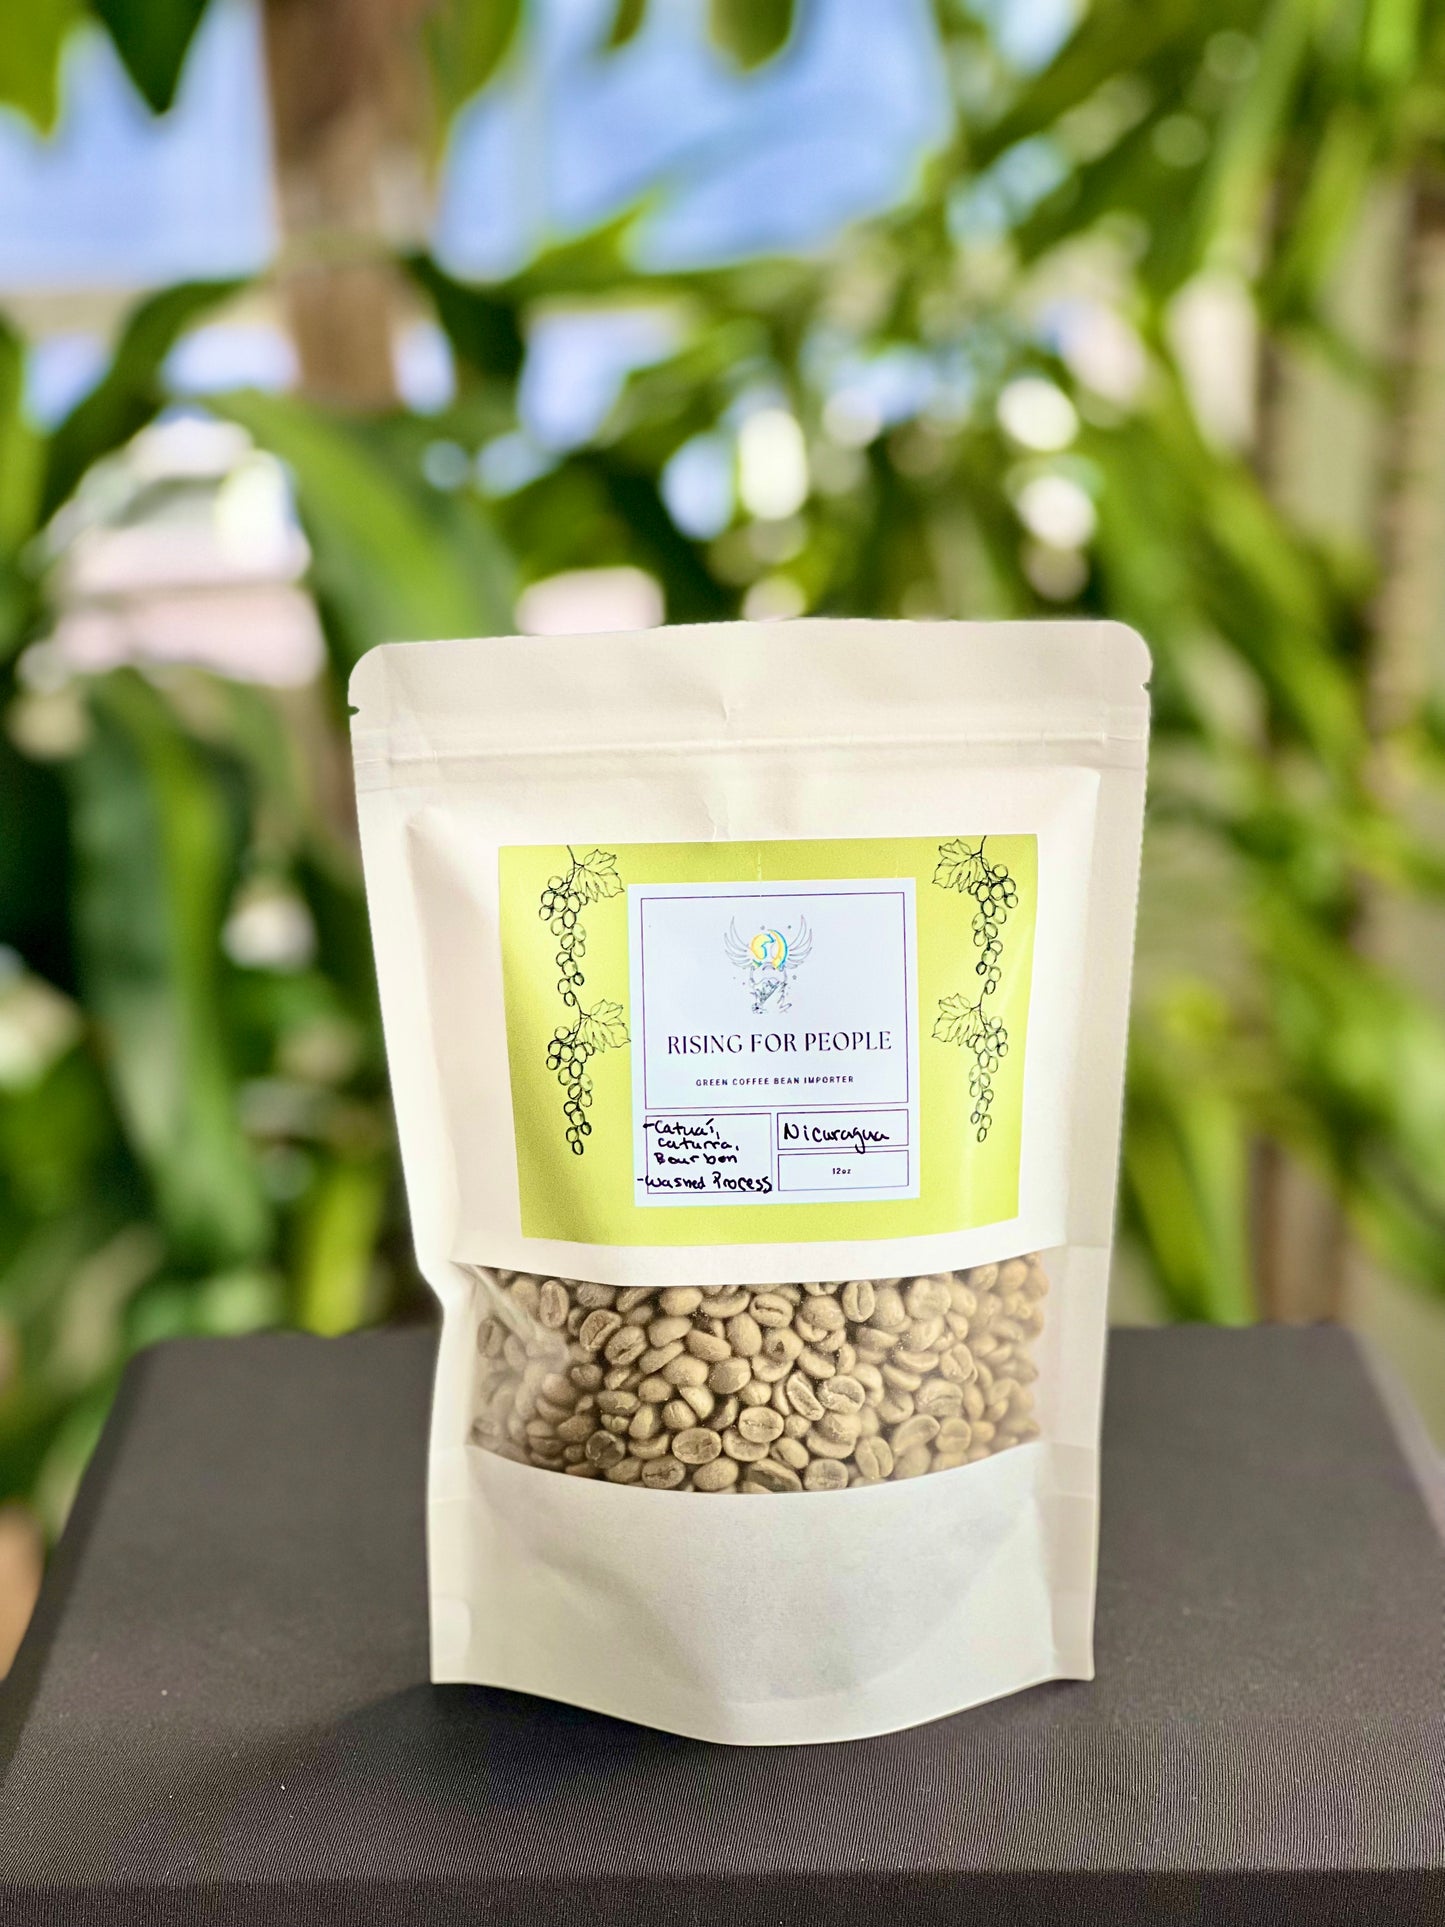 Nicaragua – Grains de café vert 